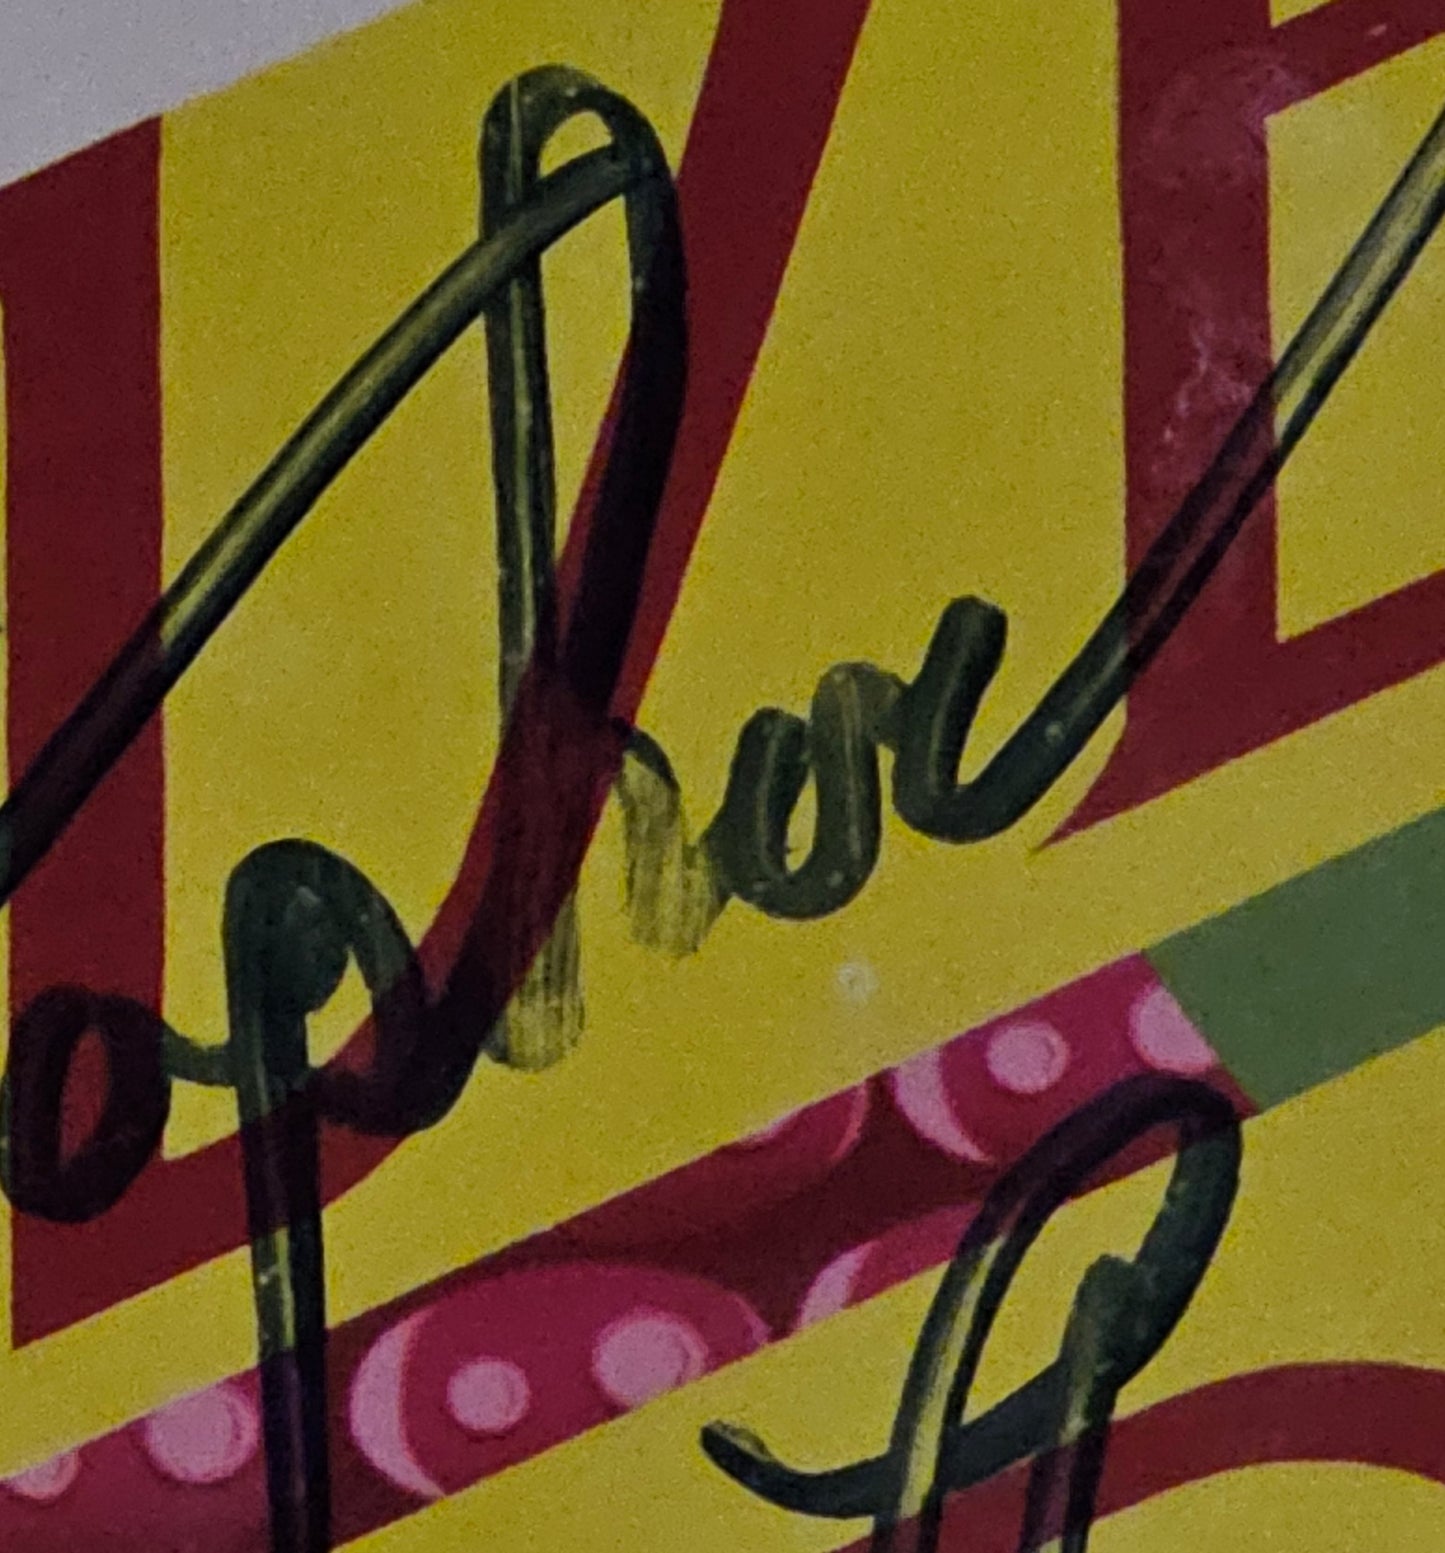 Christopher Lloyd Signed Hoverboard